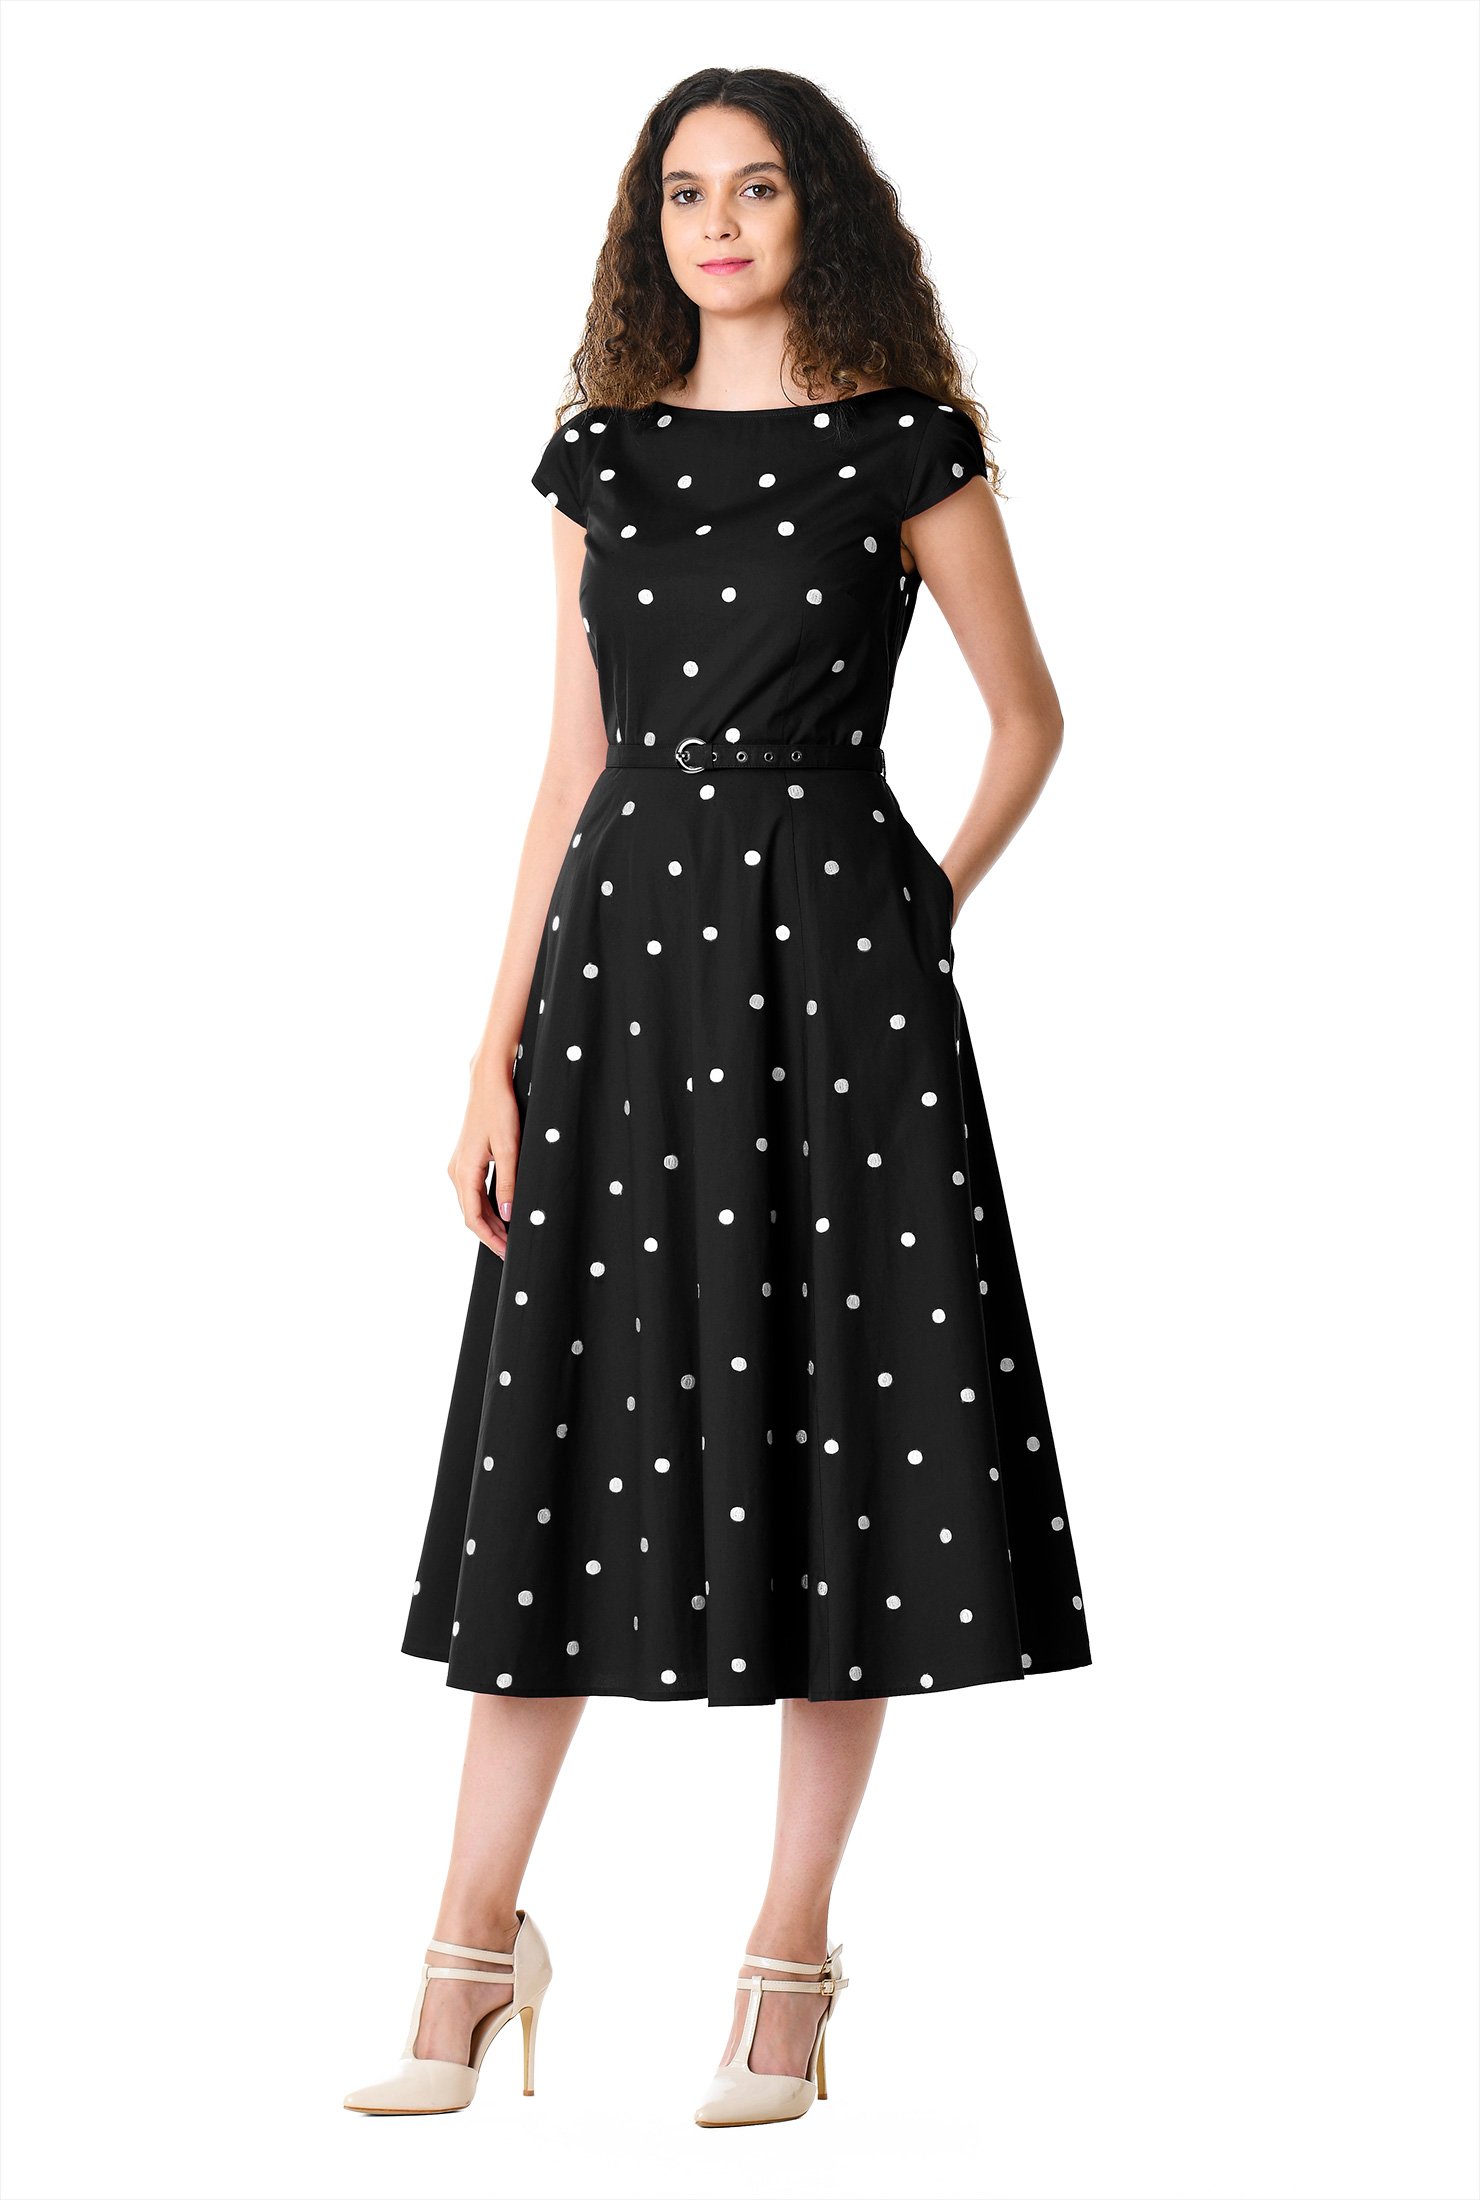 Shop Polka dot embellished cotton poplin dress | eShakti